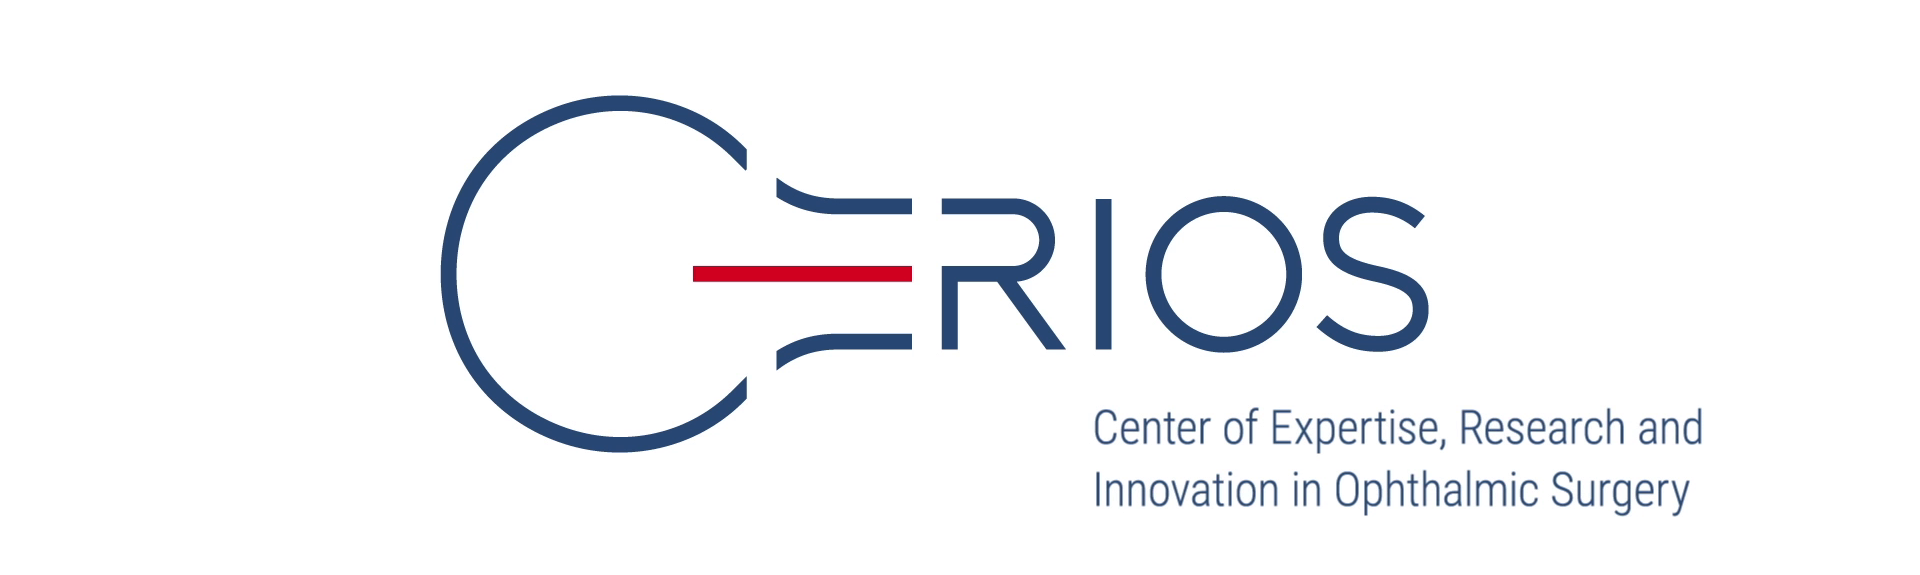 DORC announces the opening of CERIOS